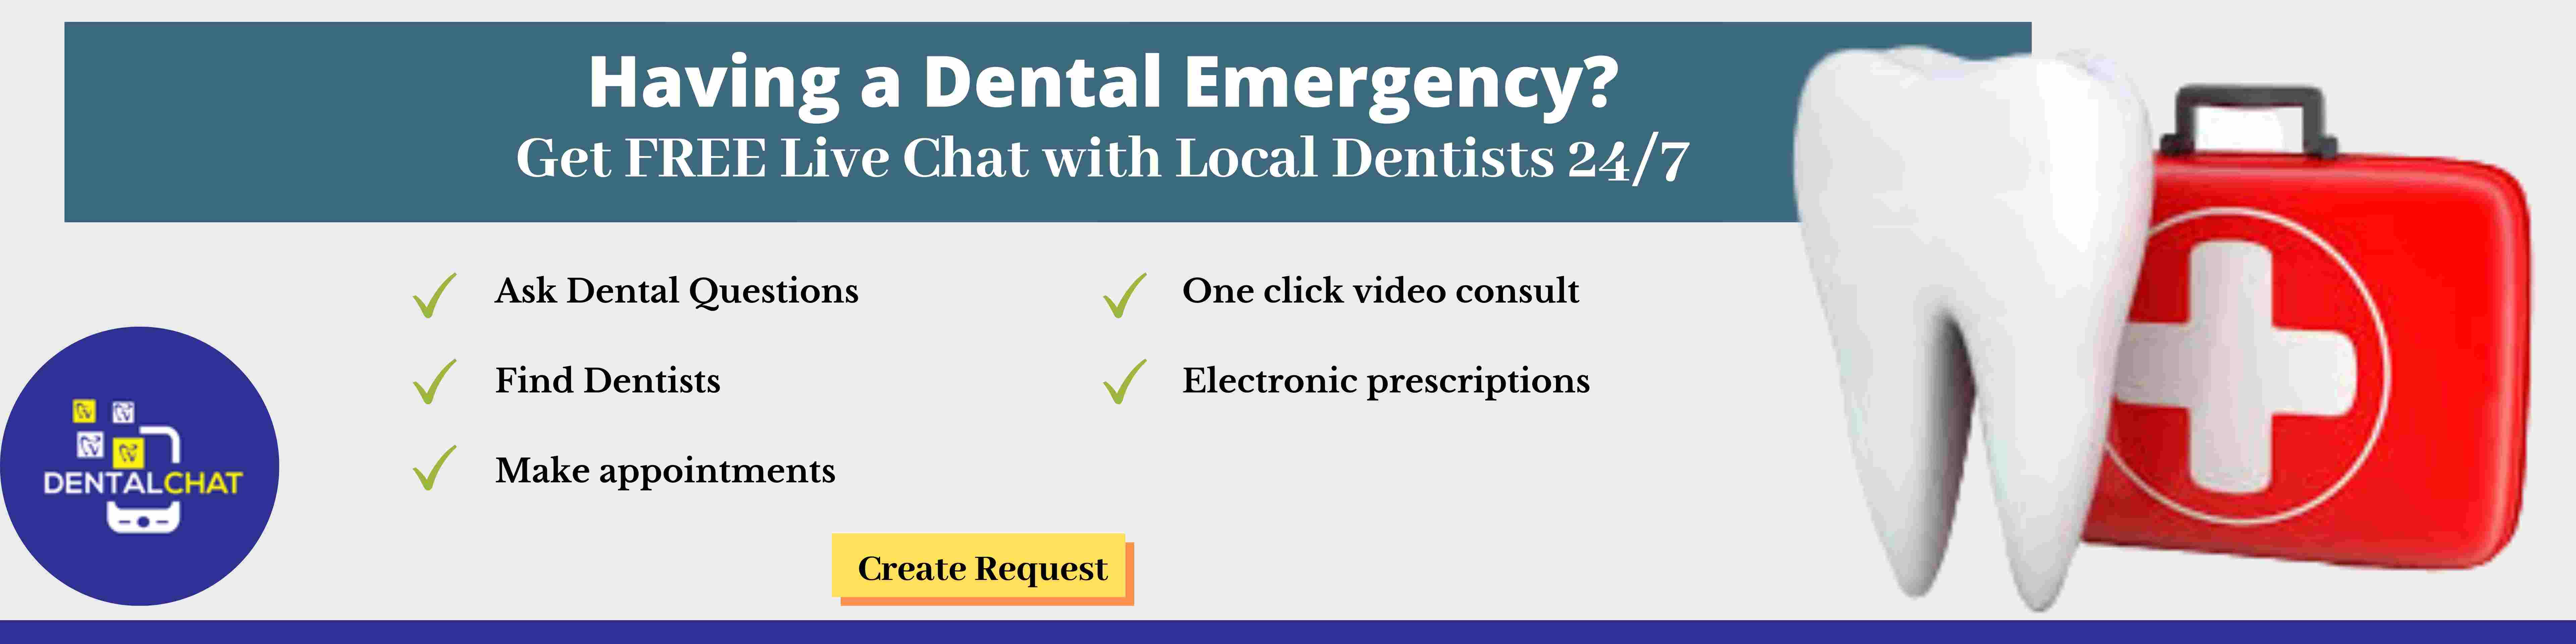 Emergency tele dentistry help online, local best emergency dentists questions